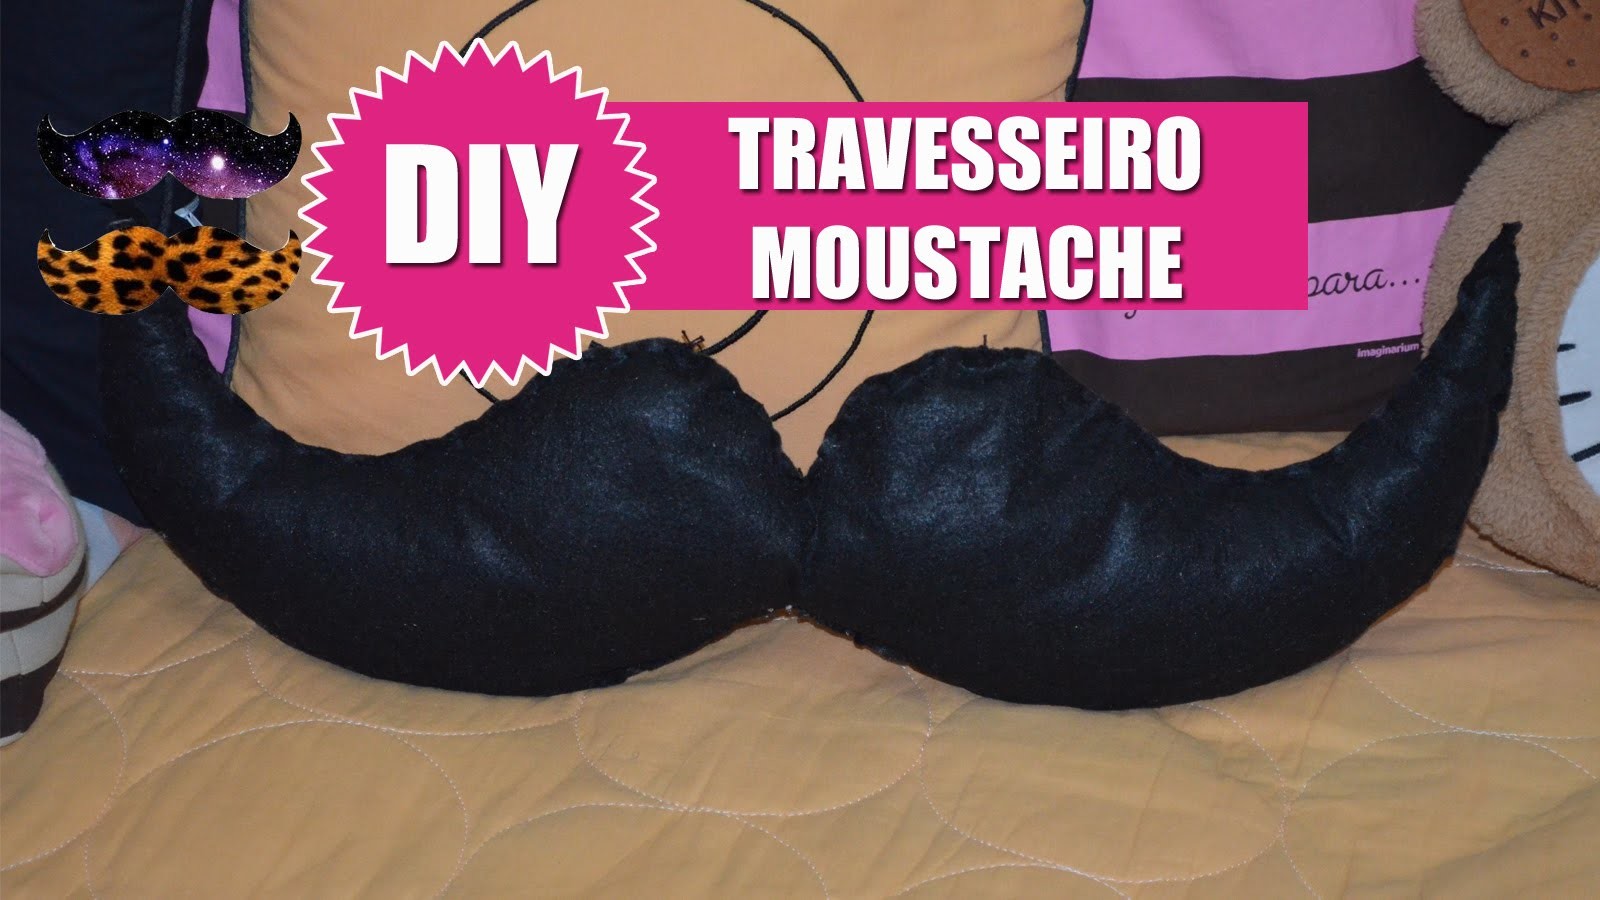 DIY Travesseiro Moustache Divertido e Lindo